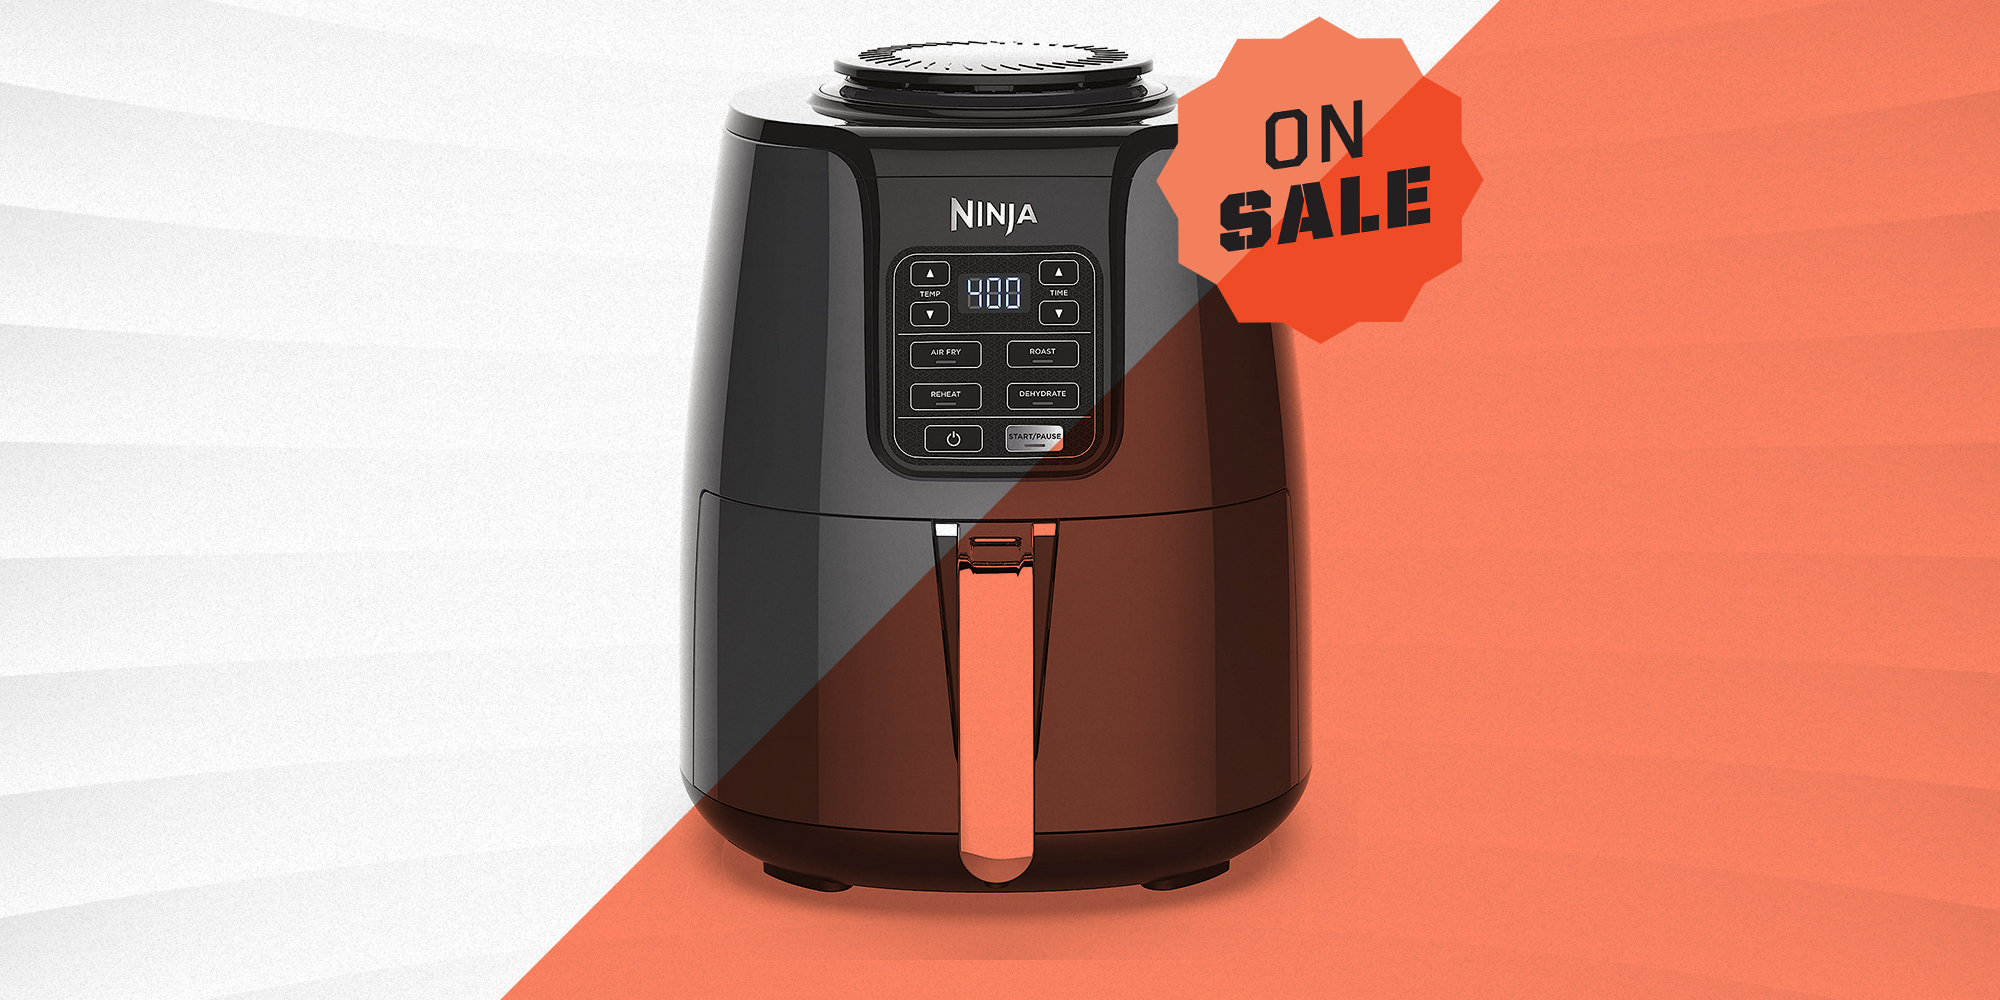 The Ninja Dual Basket Air Fryer just received a rare price drop